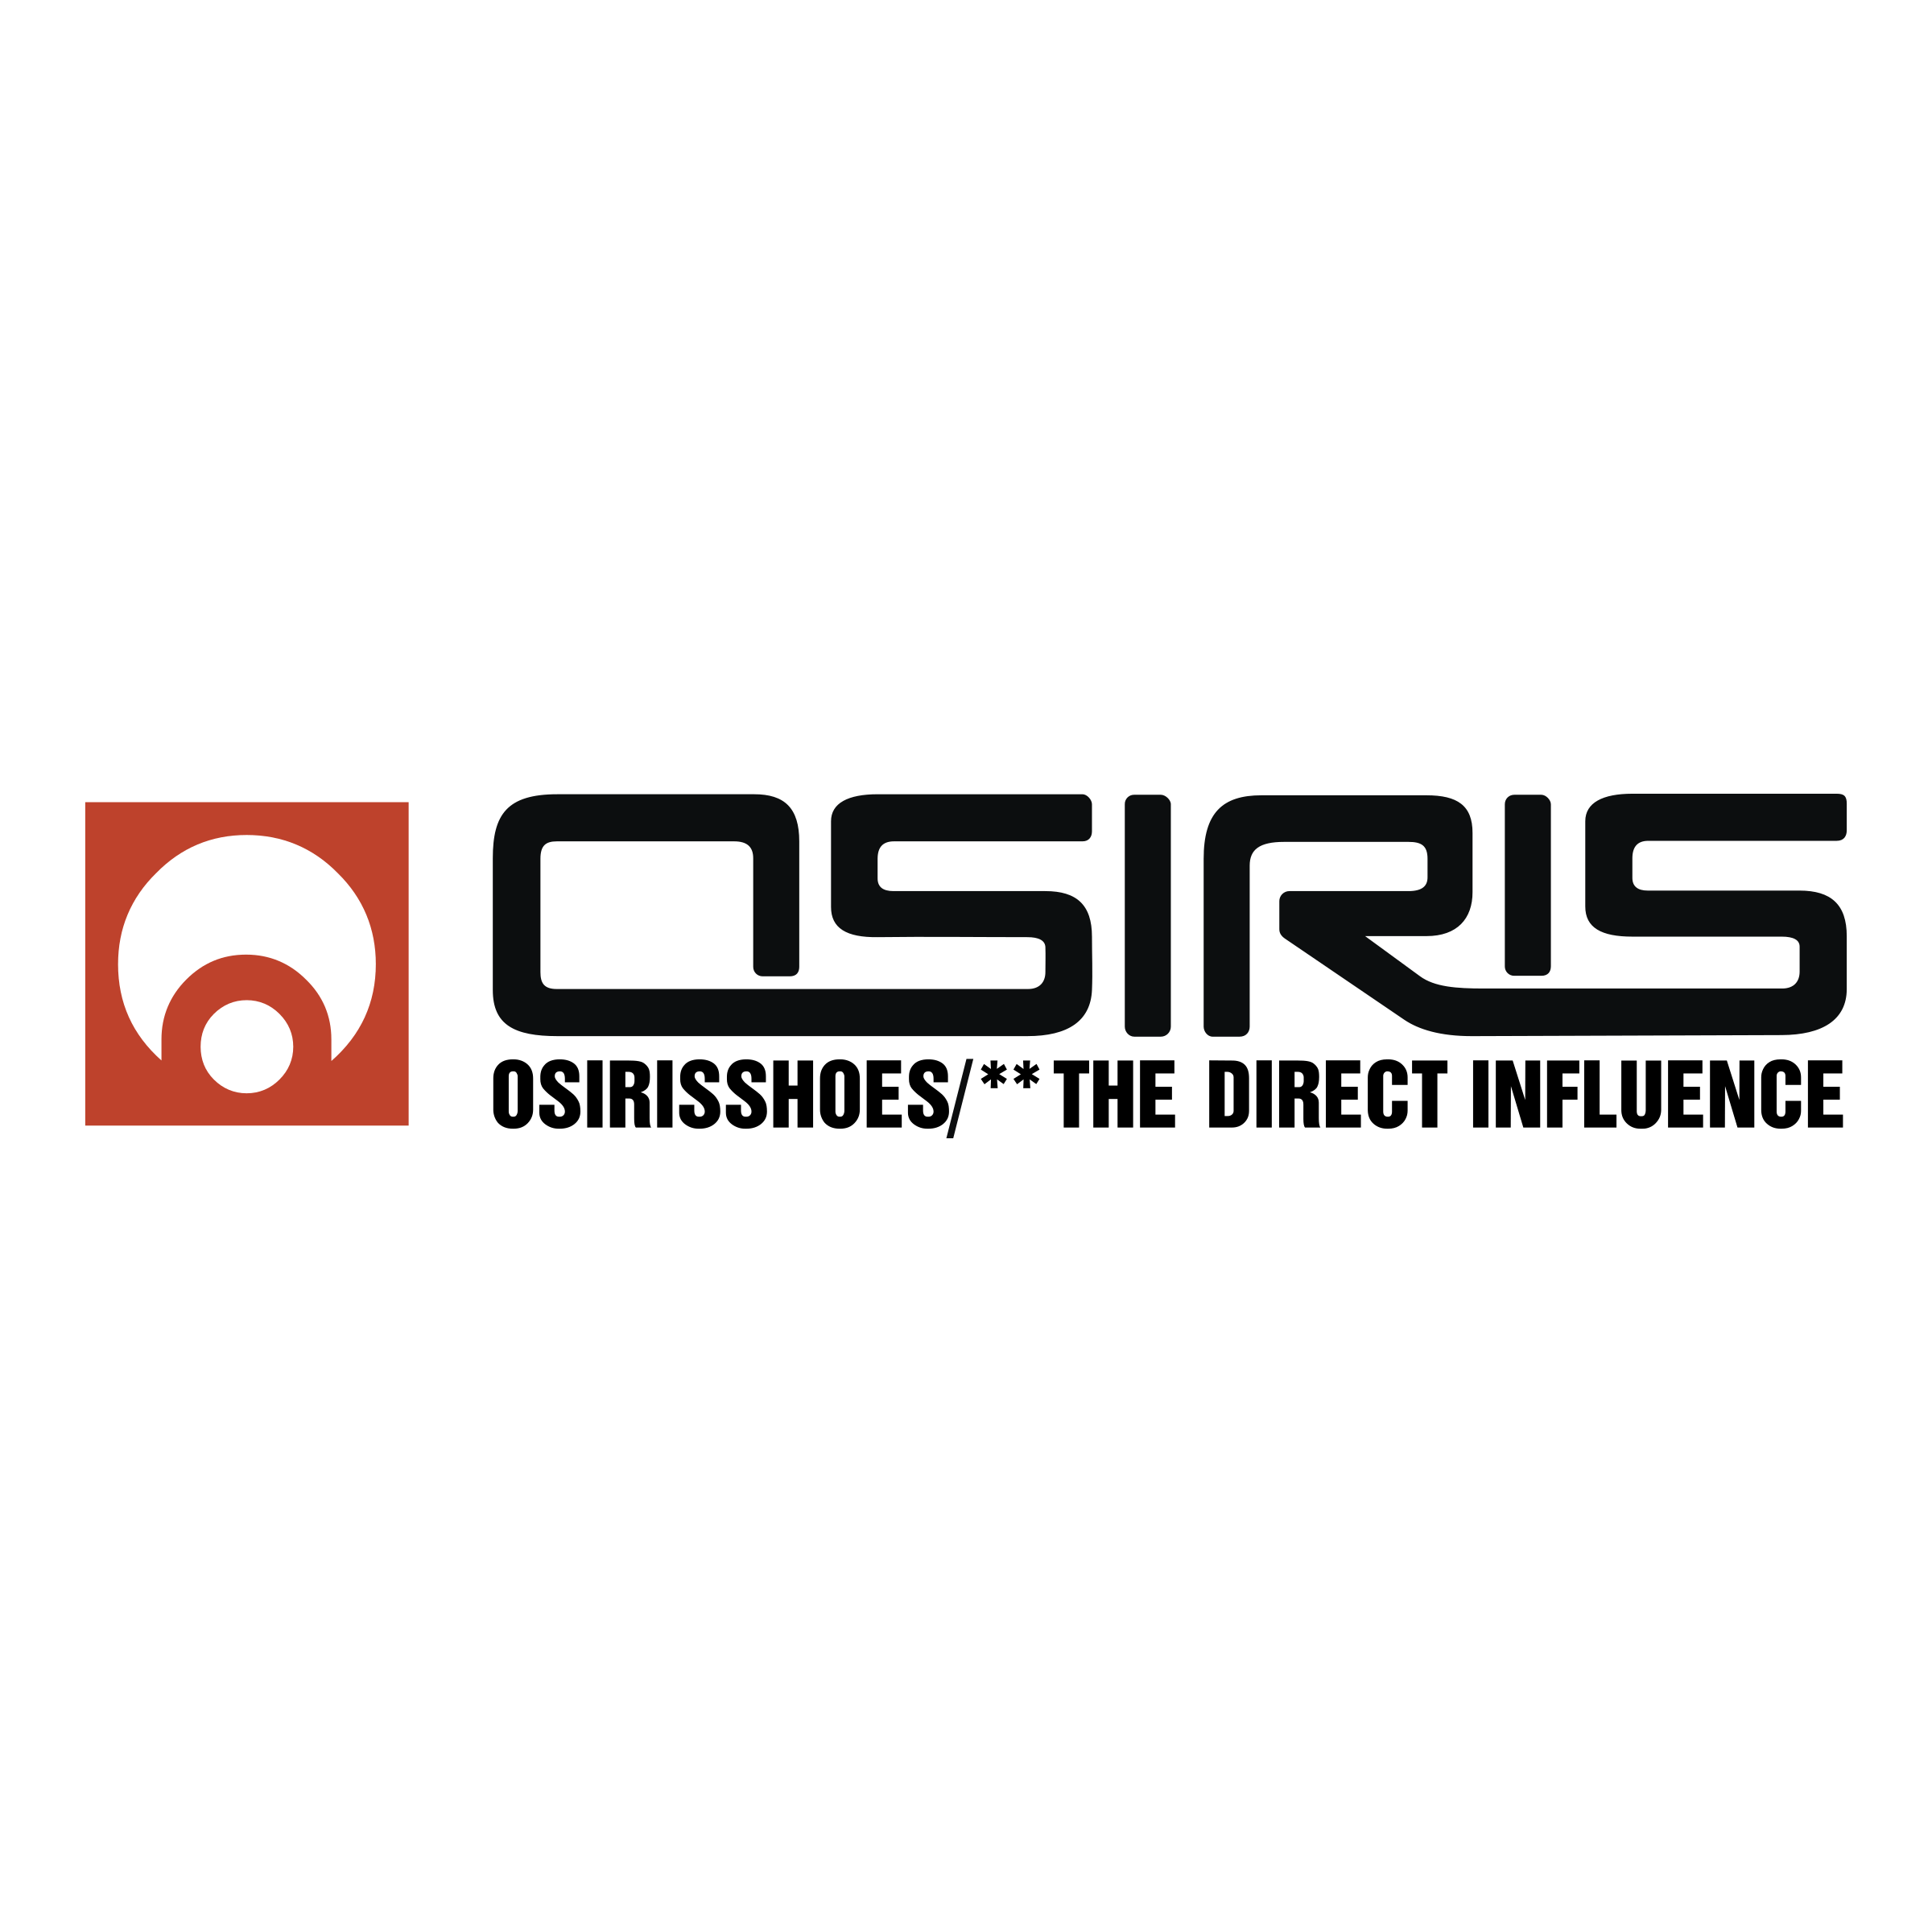 Osiris Logo - Osiris Shoes Logo PNG Transparent & SVG Vector - Freebie Supply